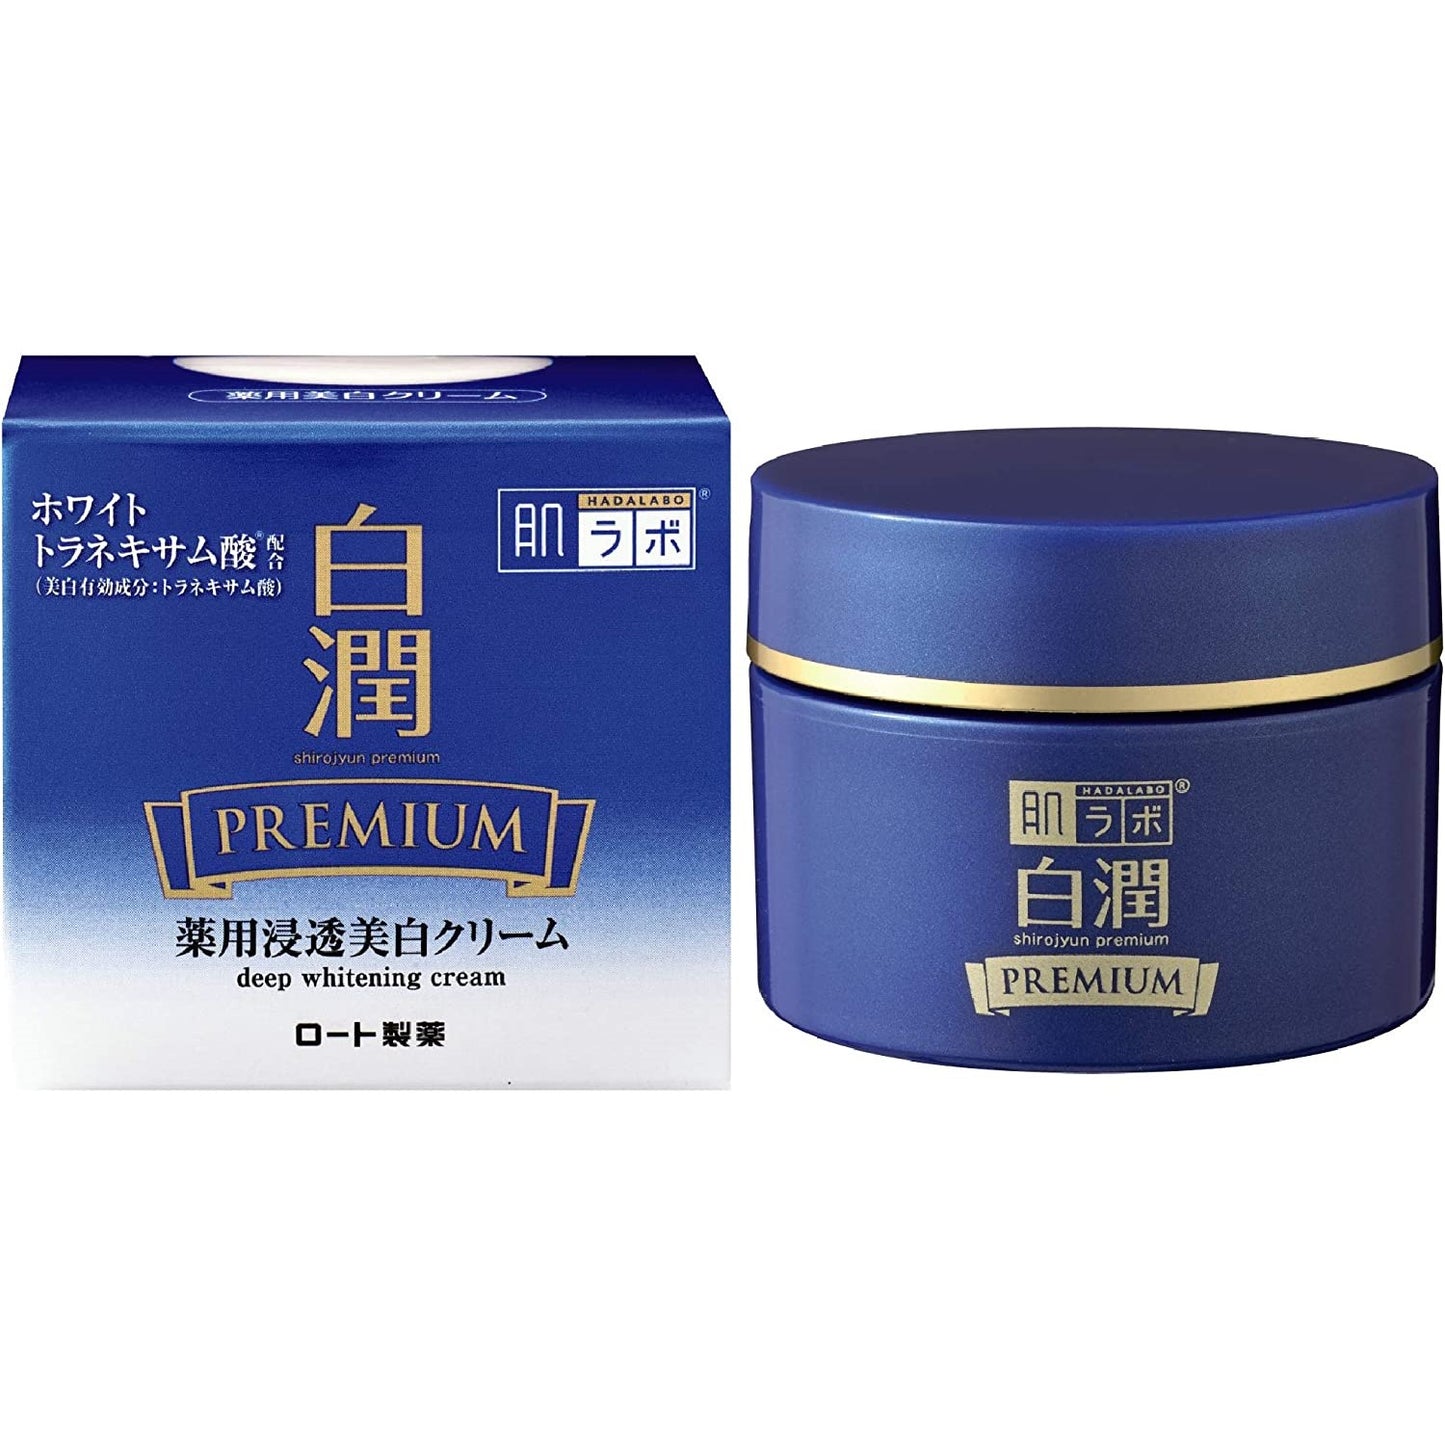 Rohto Mentholatum - Hada Labo Shirojyun Premium Deep Brightening Cream (Made in Japan)